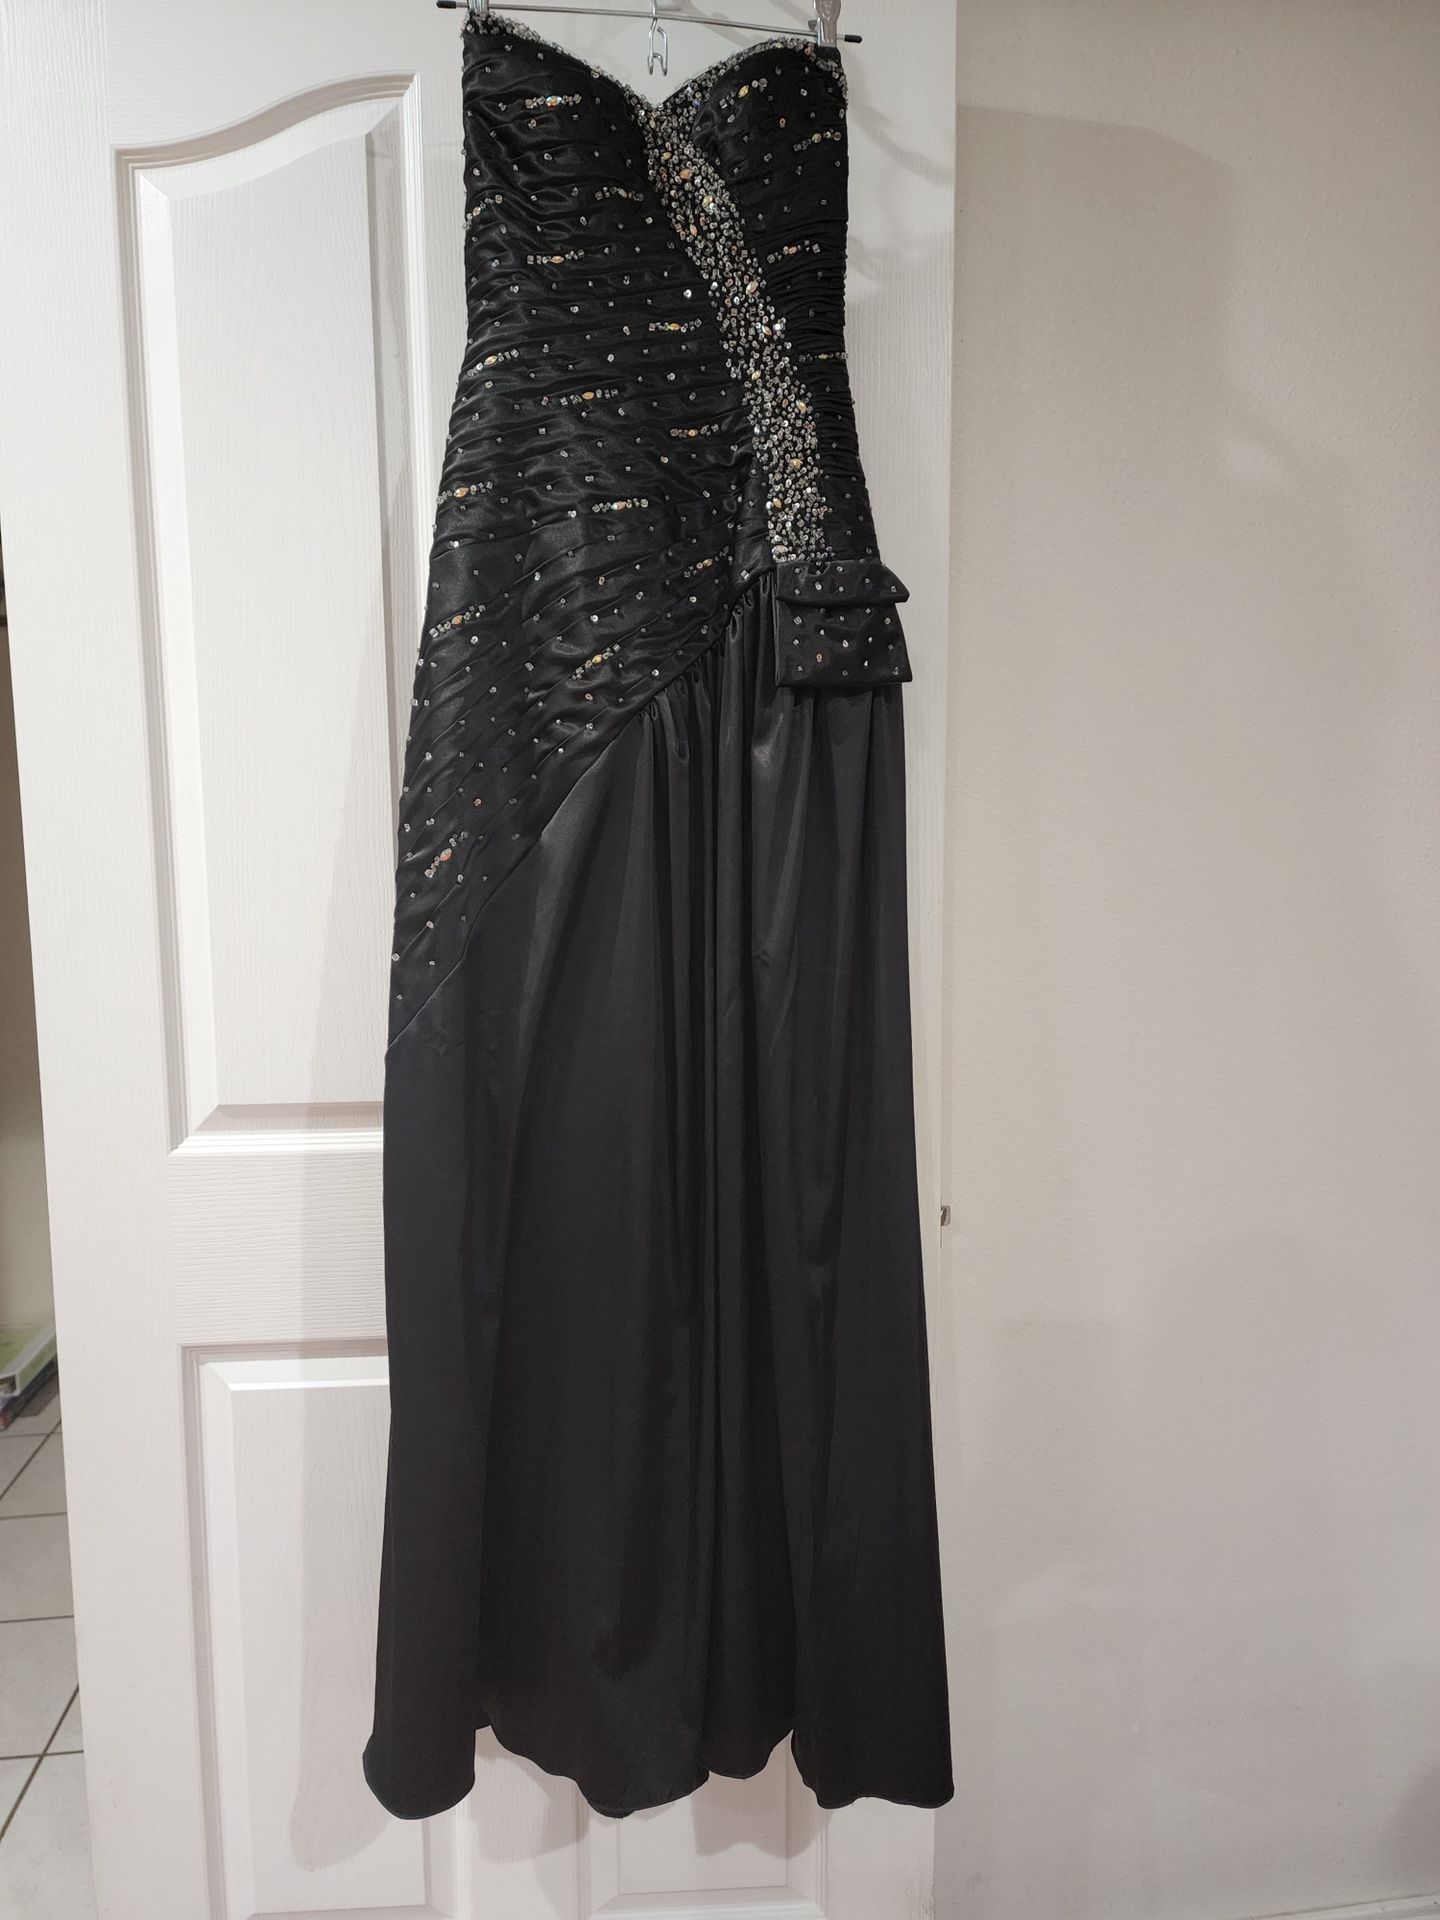 Black Formal Prom Dress size 6